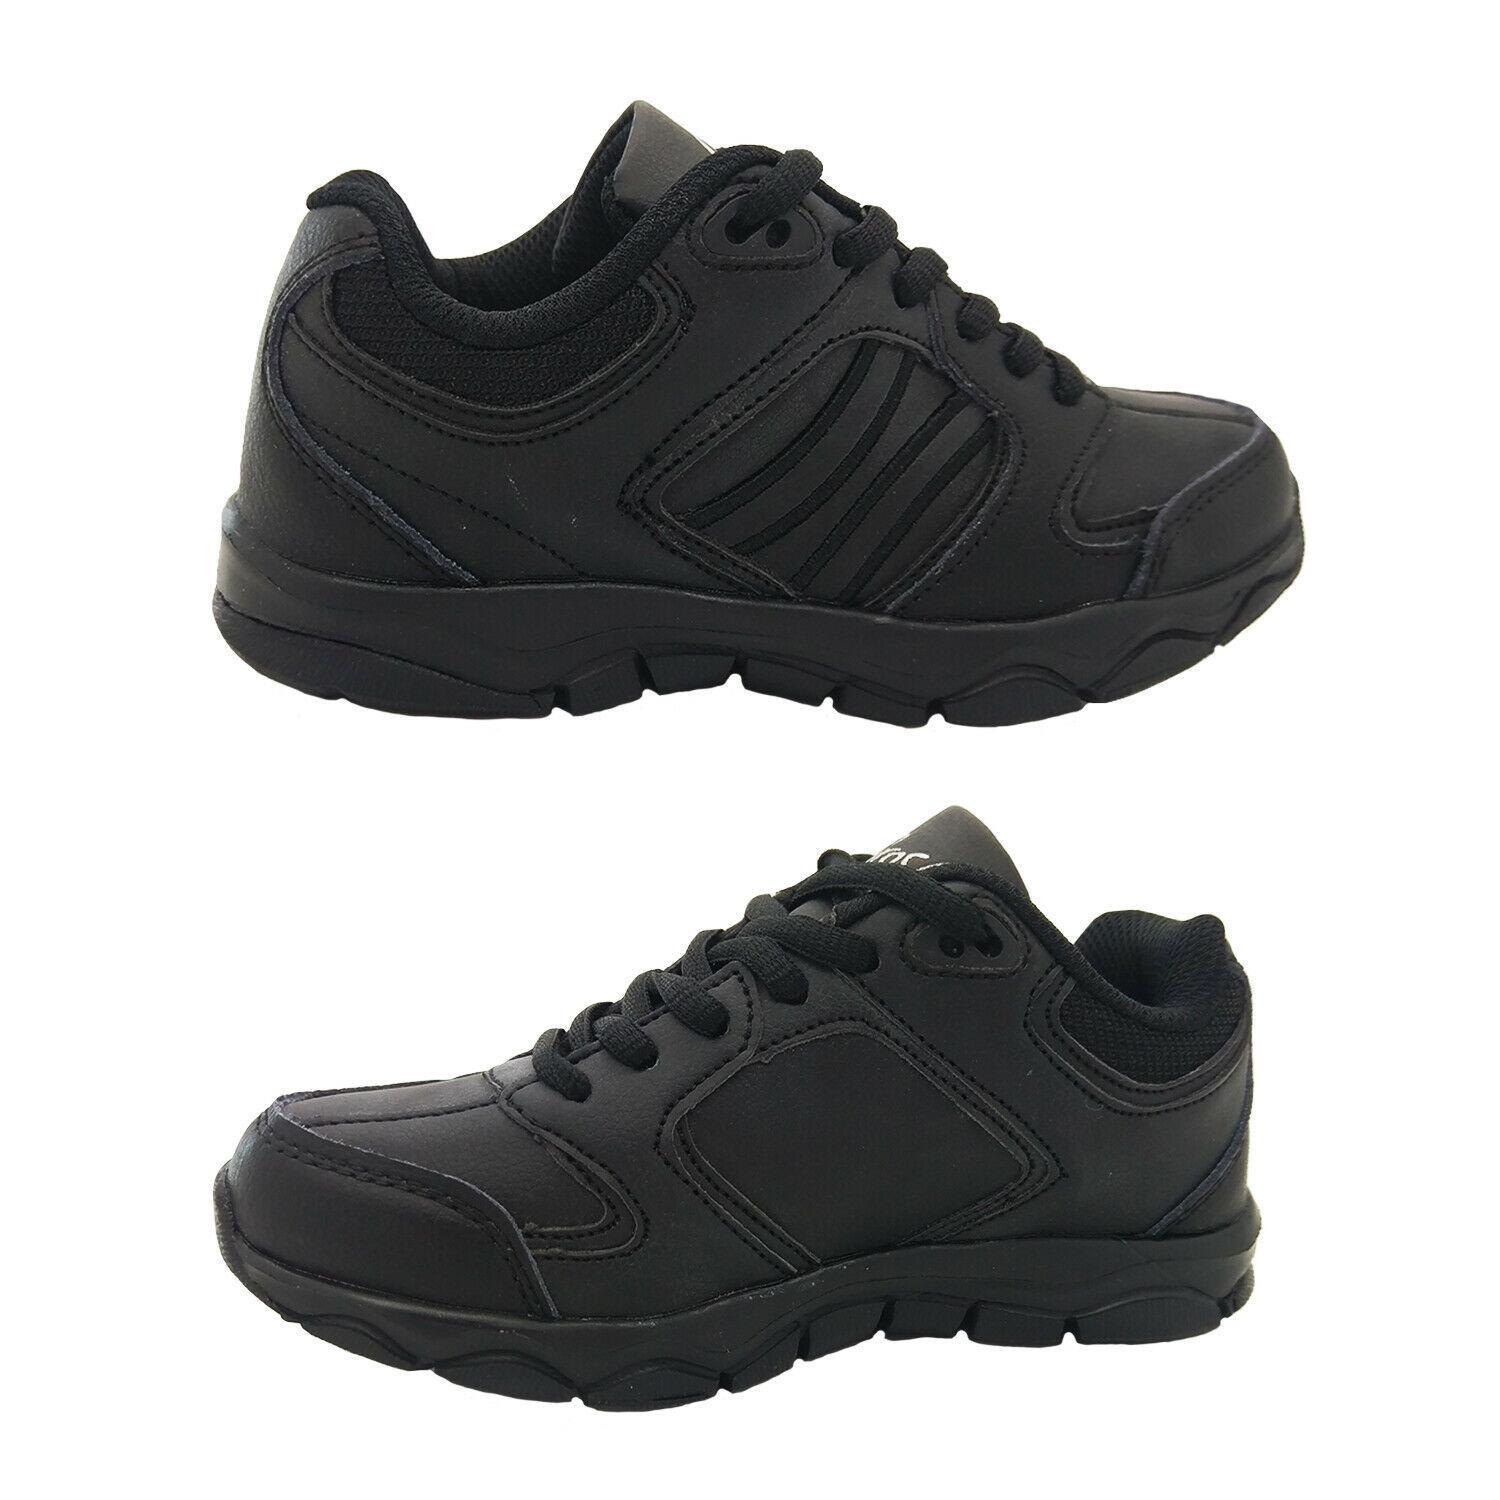 Boys Shoes Grosby Holt School Shoe Sneaker Lace up Lightweight Size 12-3 Black 12